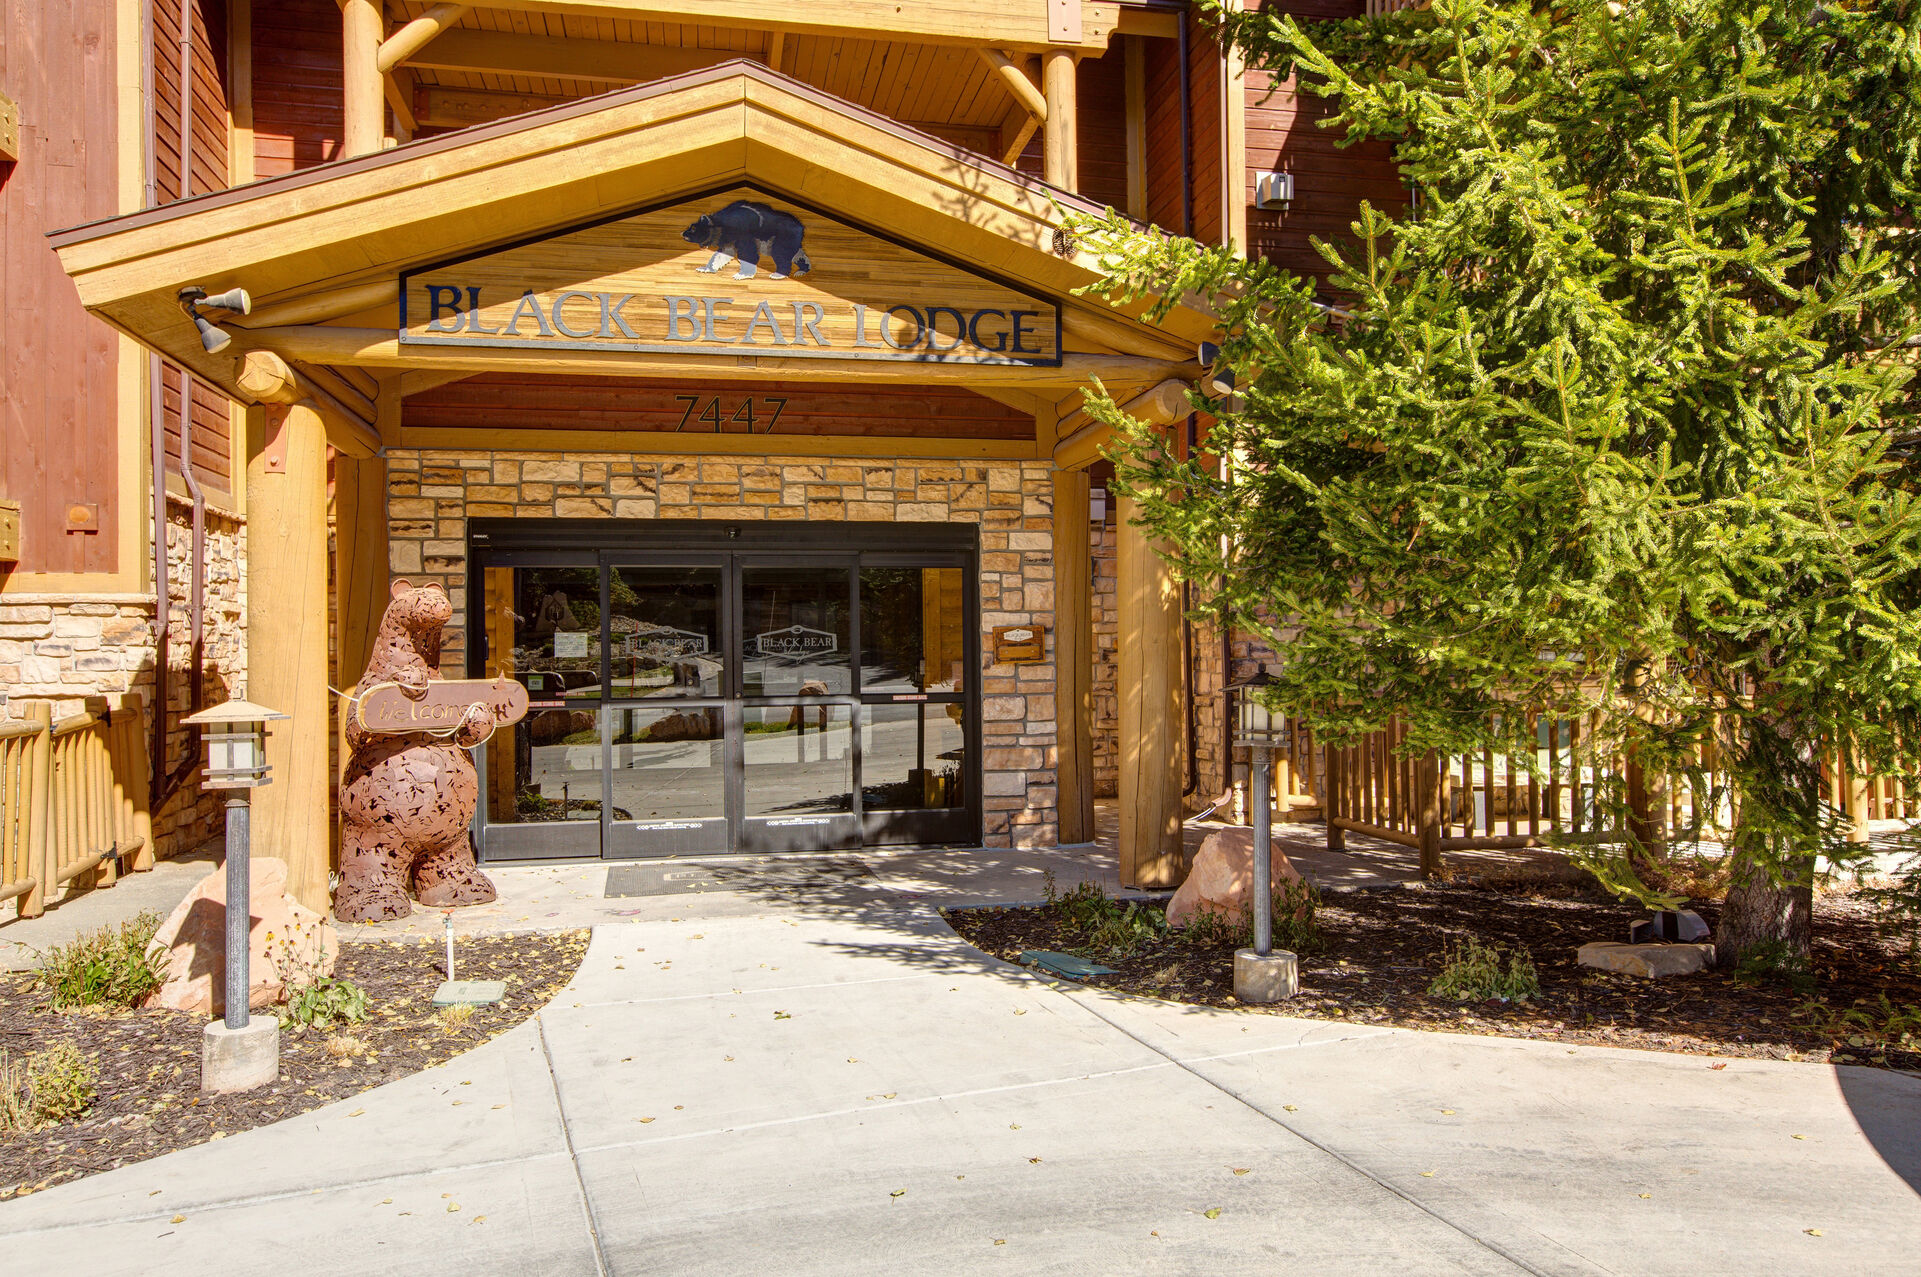 Front Entrance of Black Bear Lodge